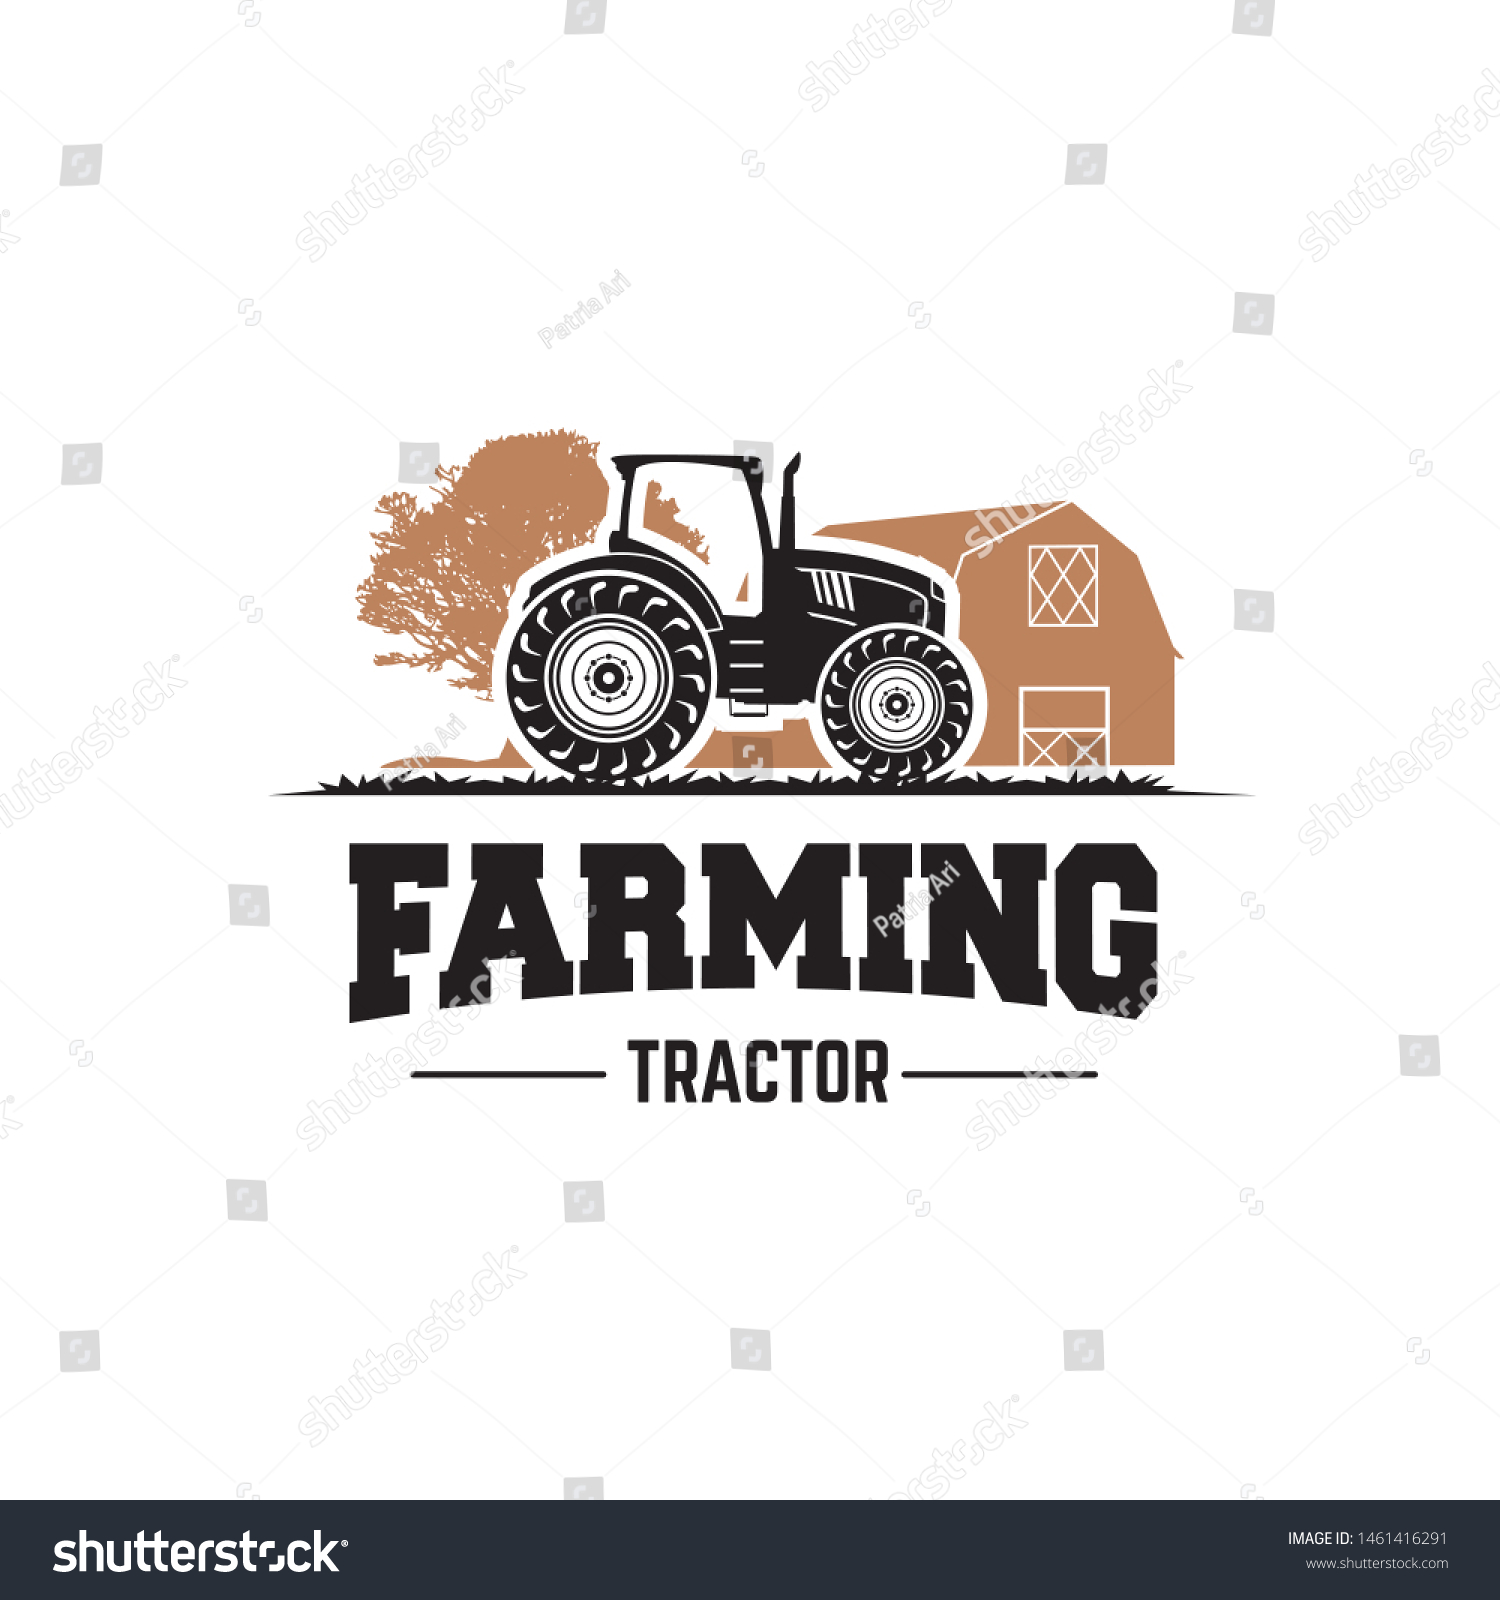 Tractor Graphic Barn Tree Illustration Farm Stock Vector (Royalty Free ...